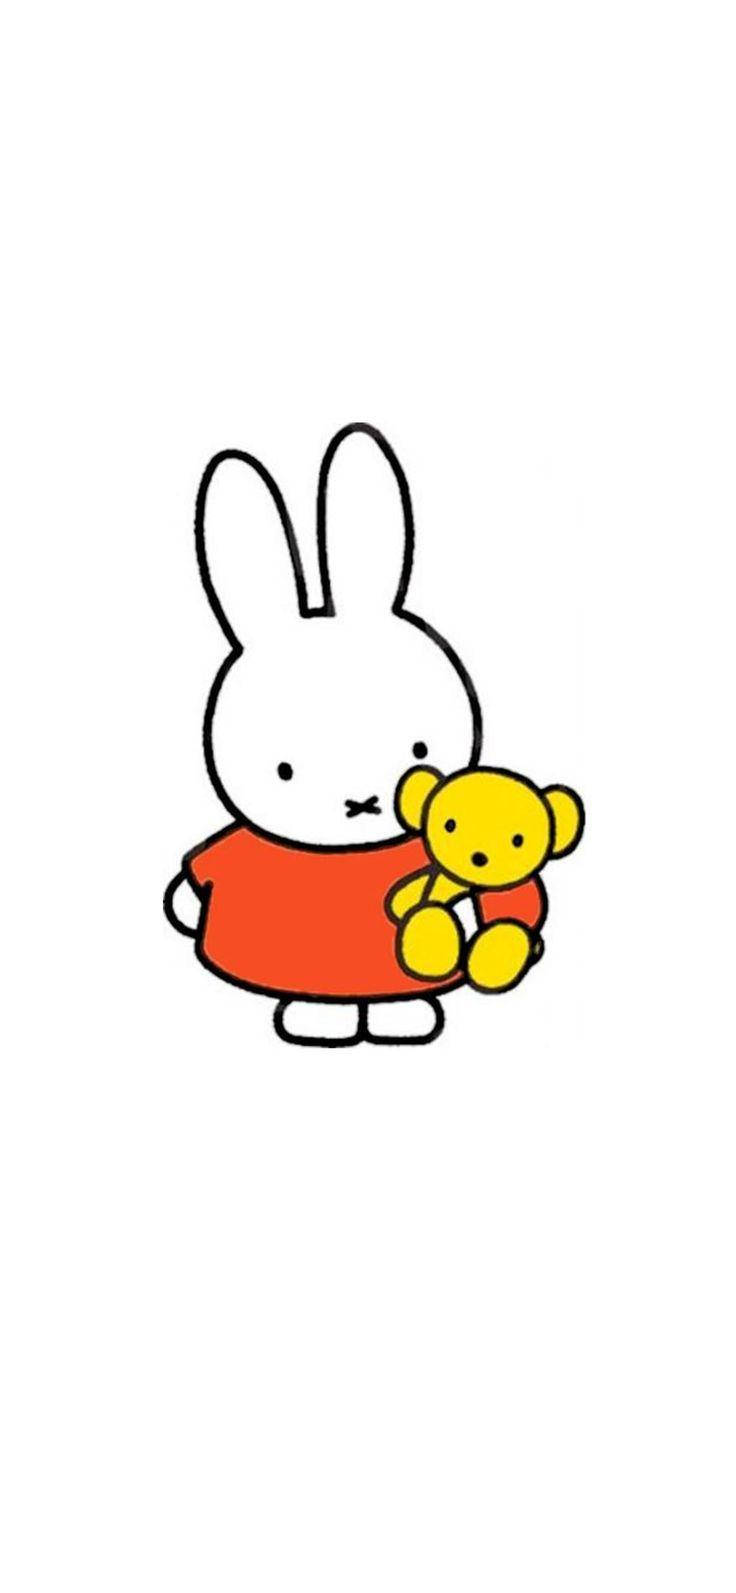 Miffy And Yellow Teddy Bear